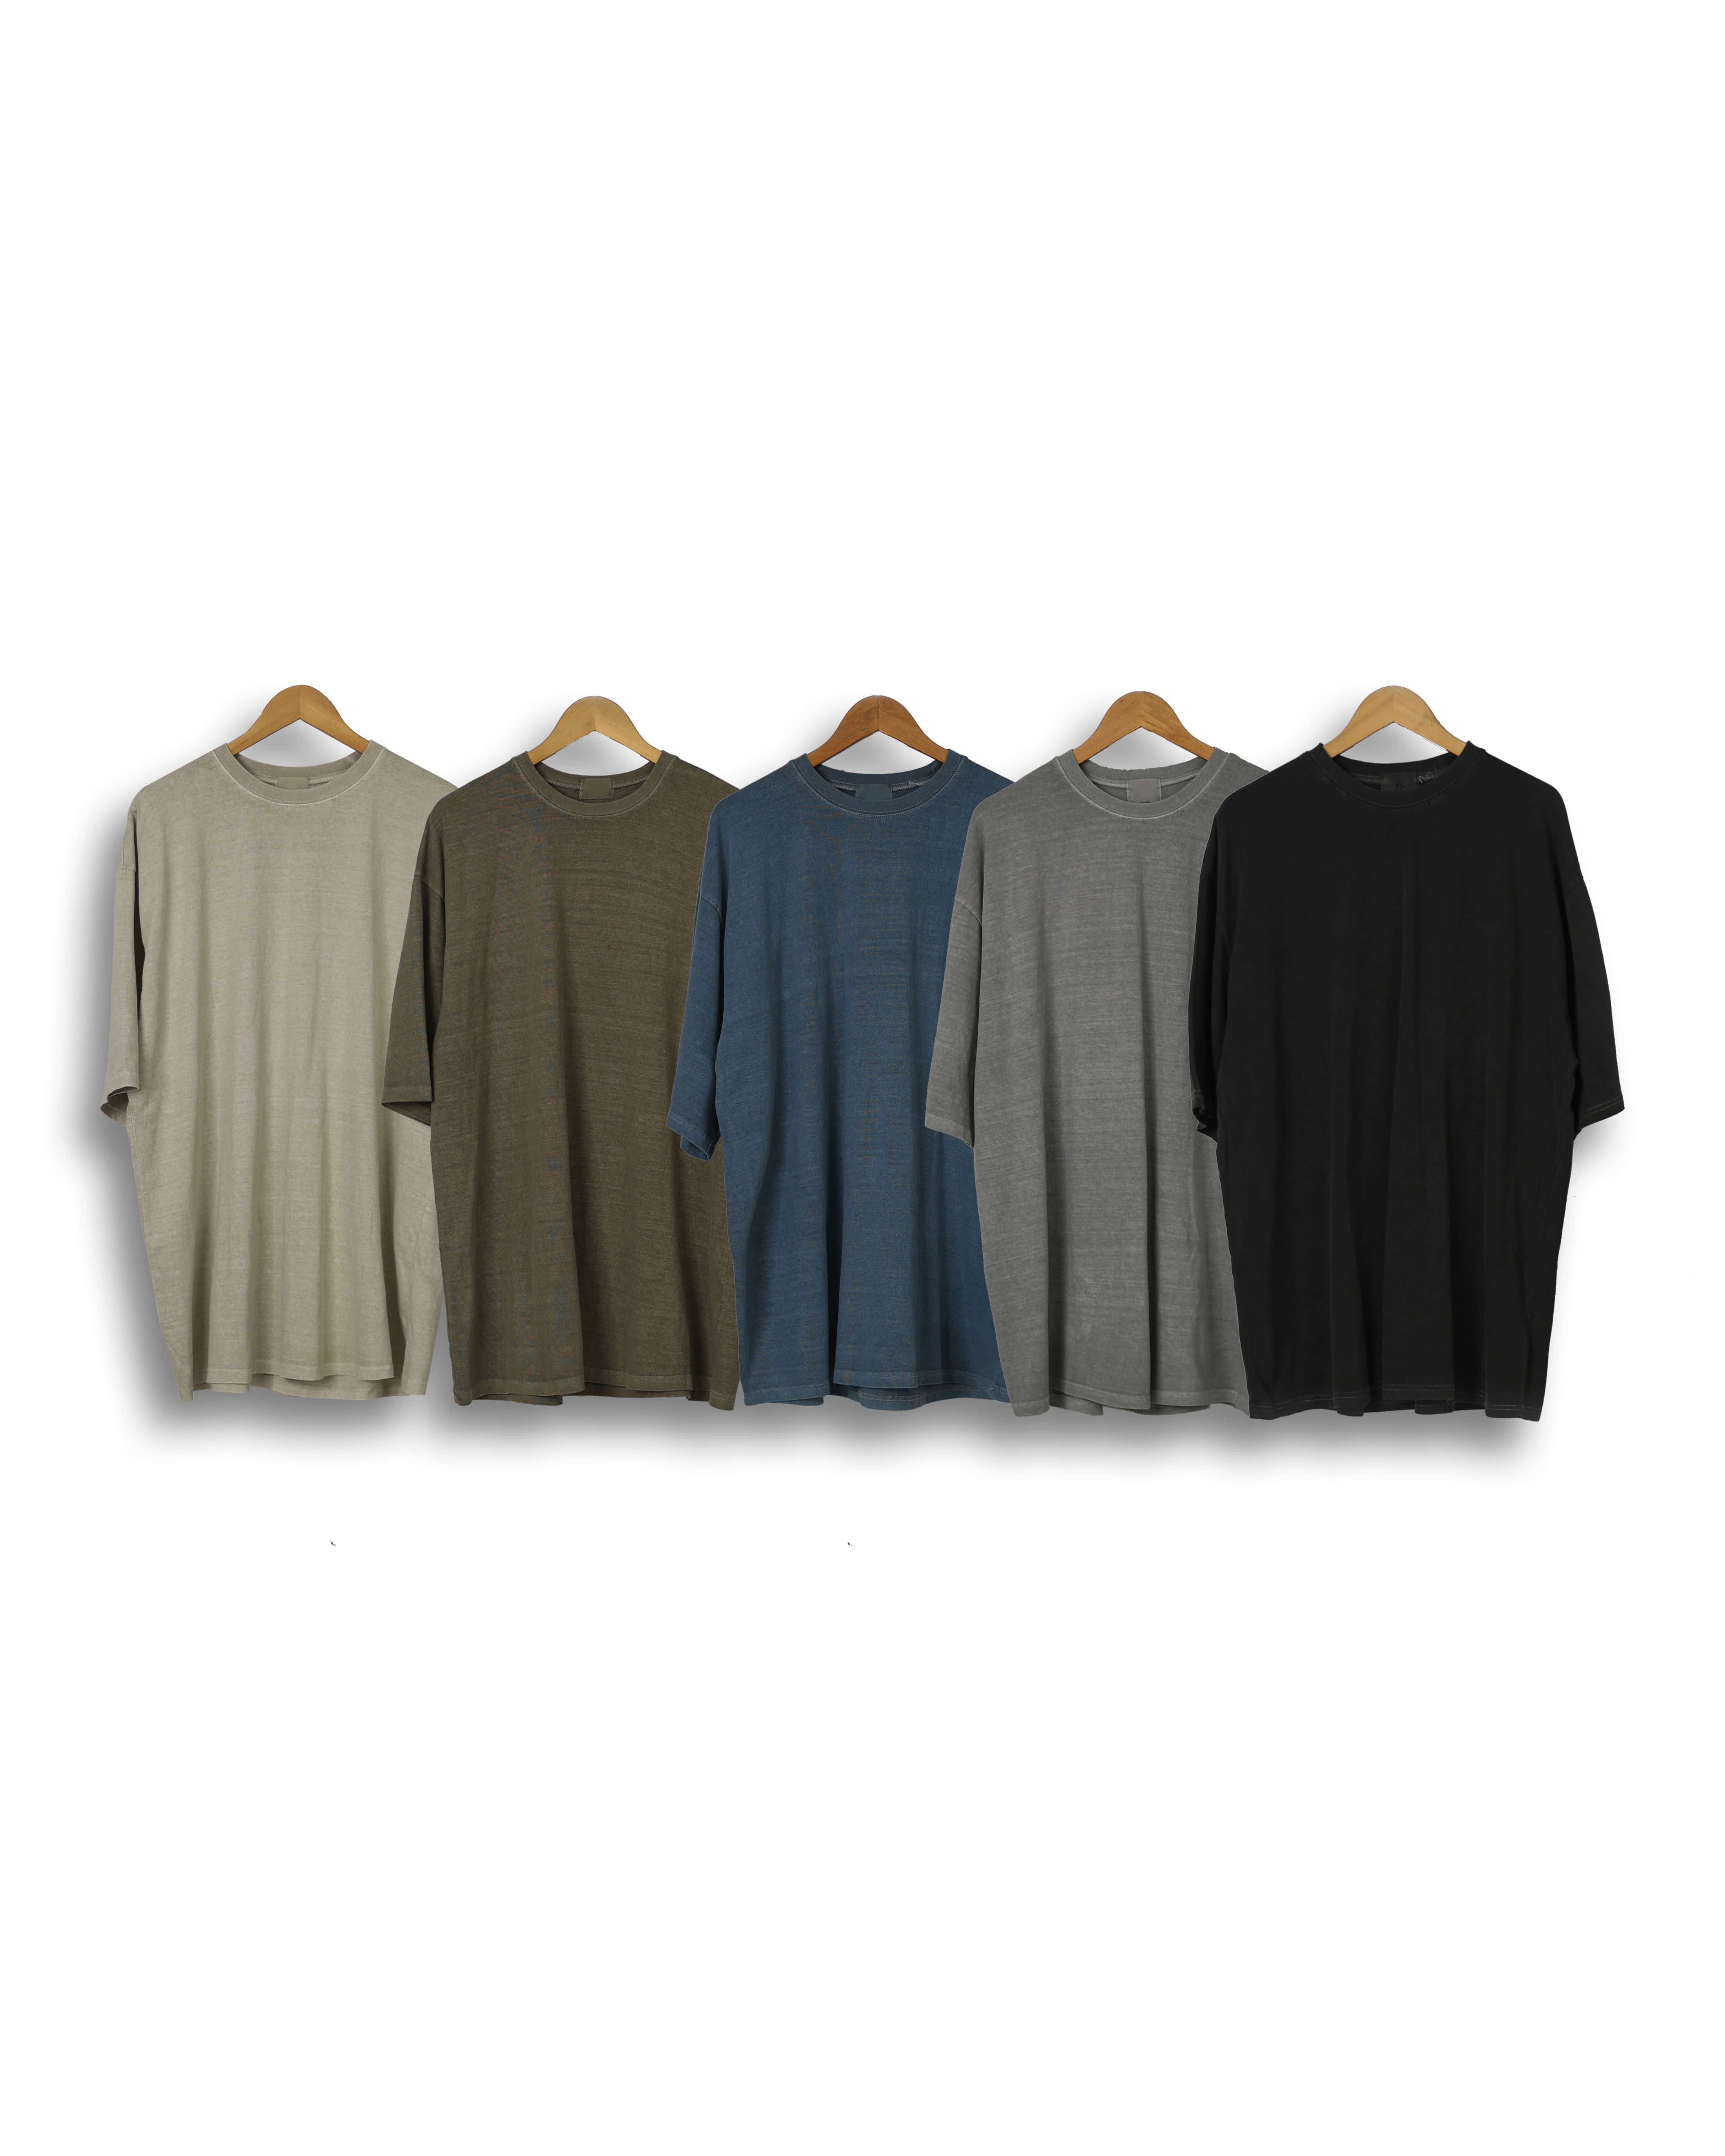 MAGG Pigment Loose Basic T Shirts (Charcoal/Gray/Khaki/Blue/Beige)